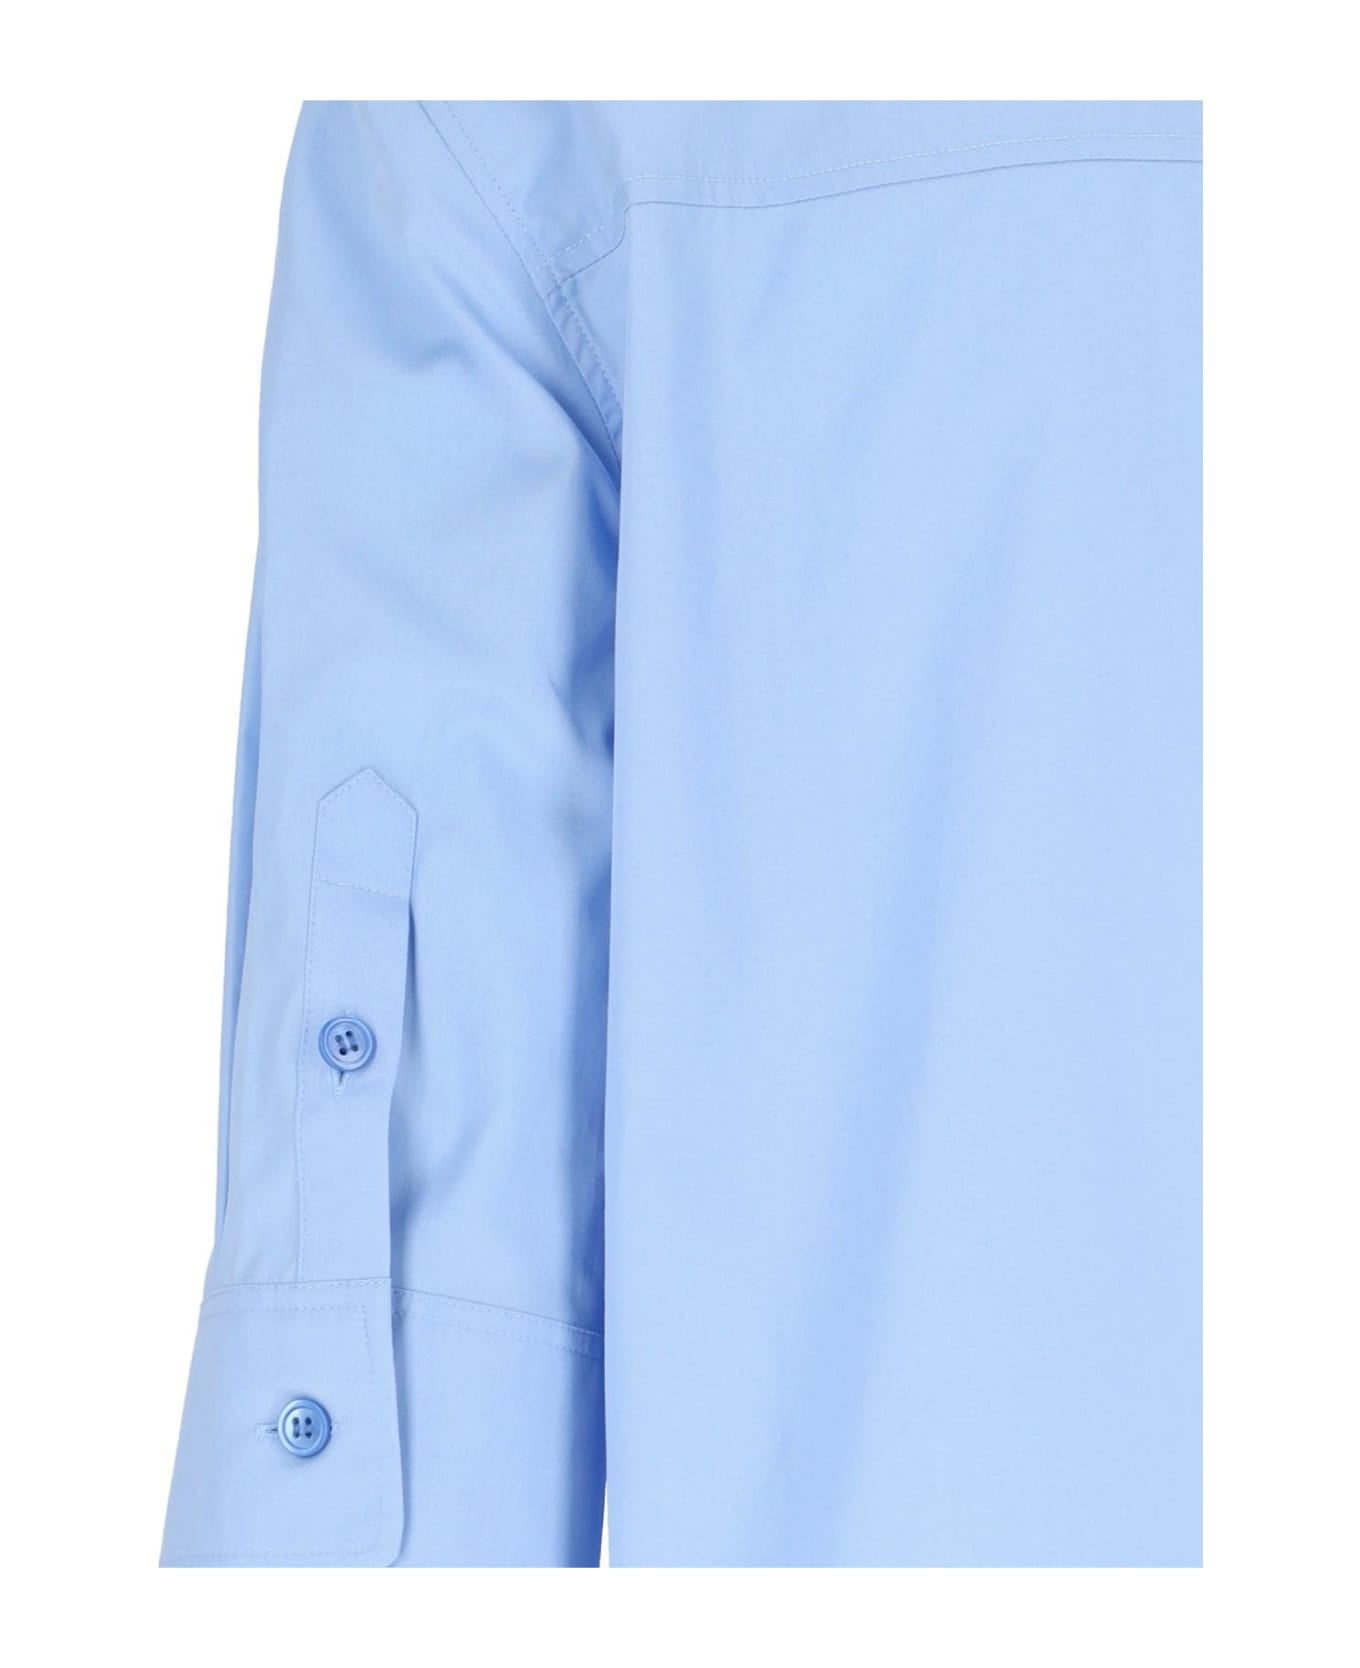 Marni Cropped Shirt - IRIS BLUE